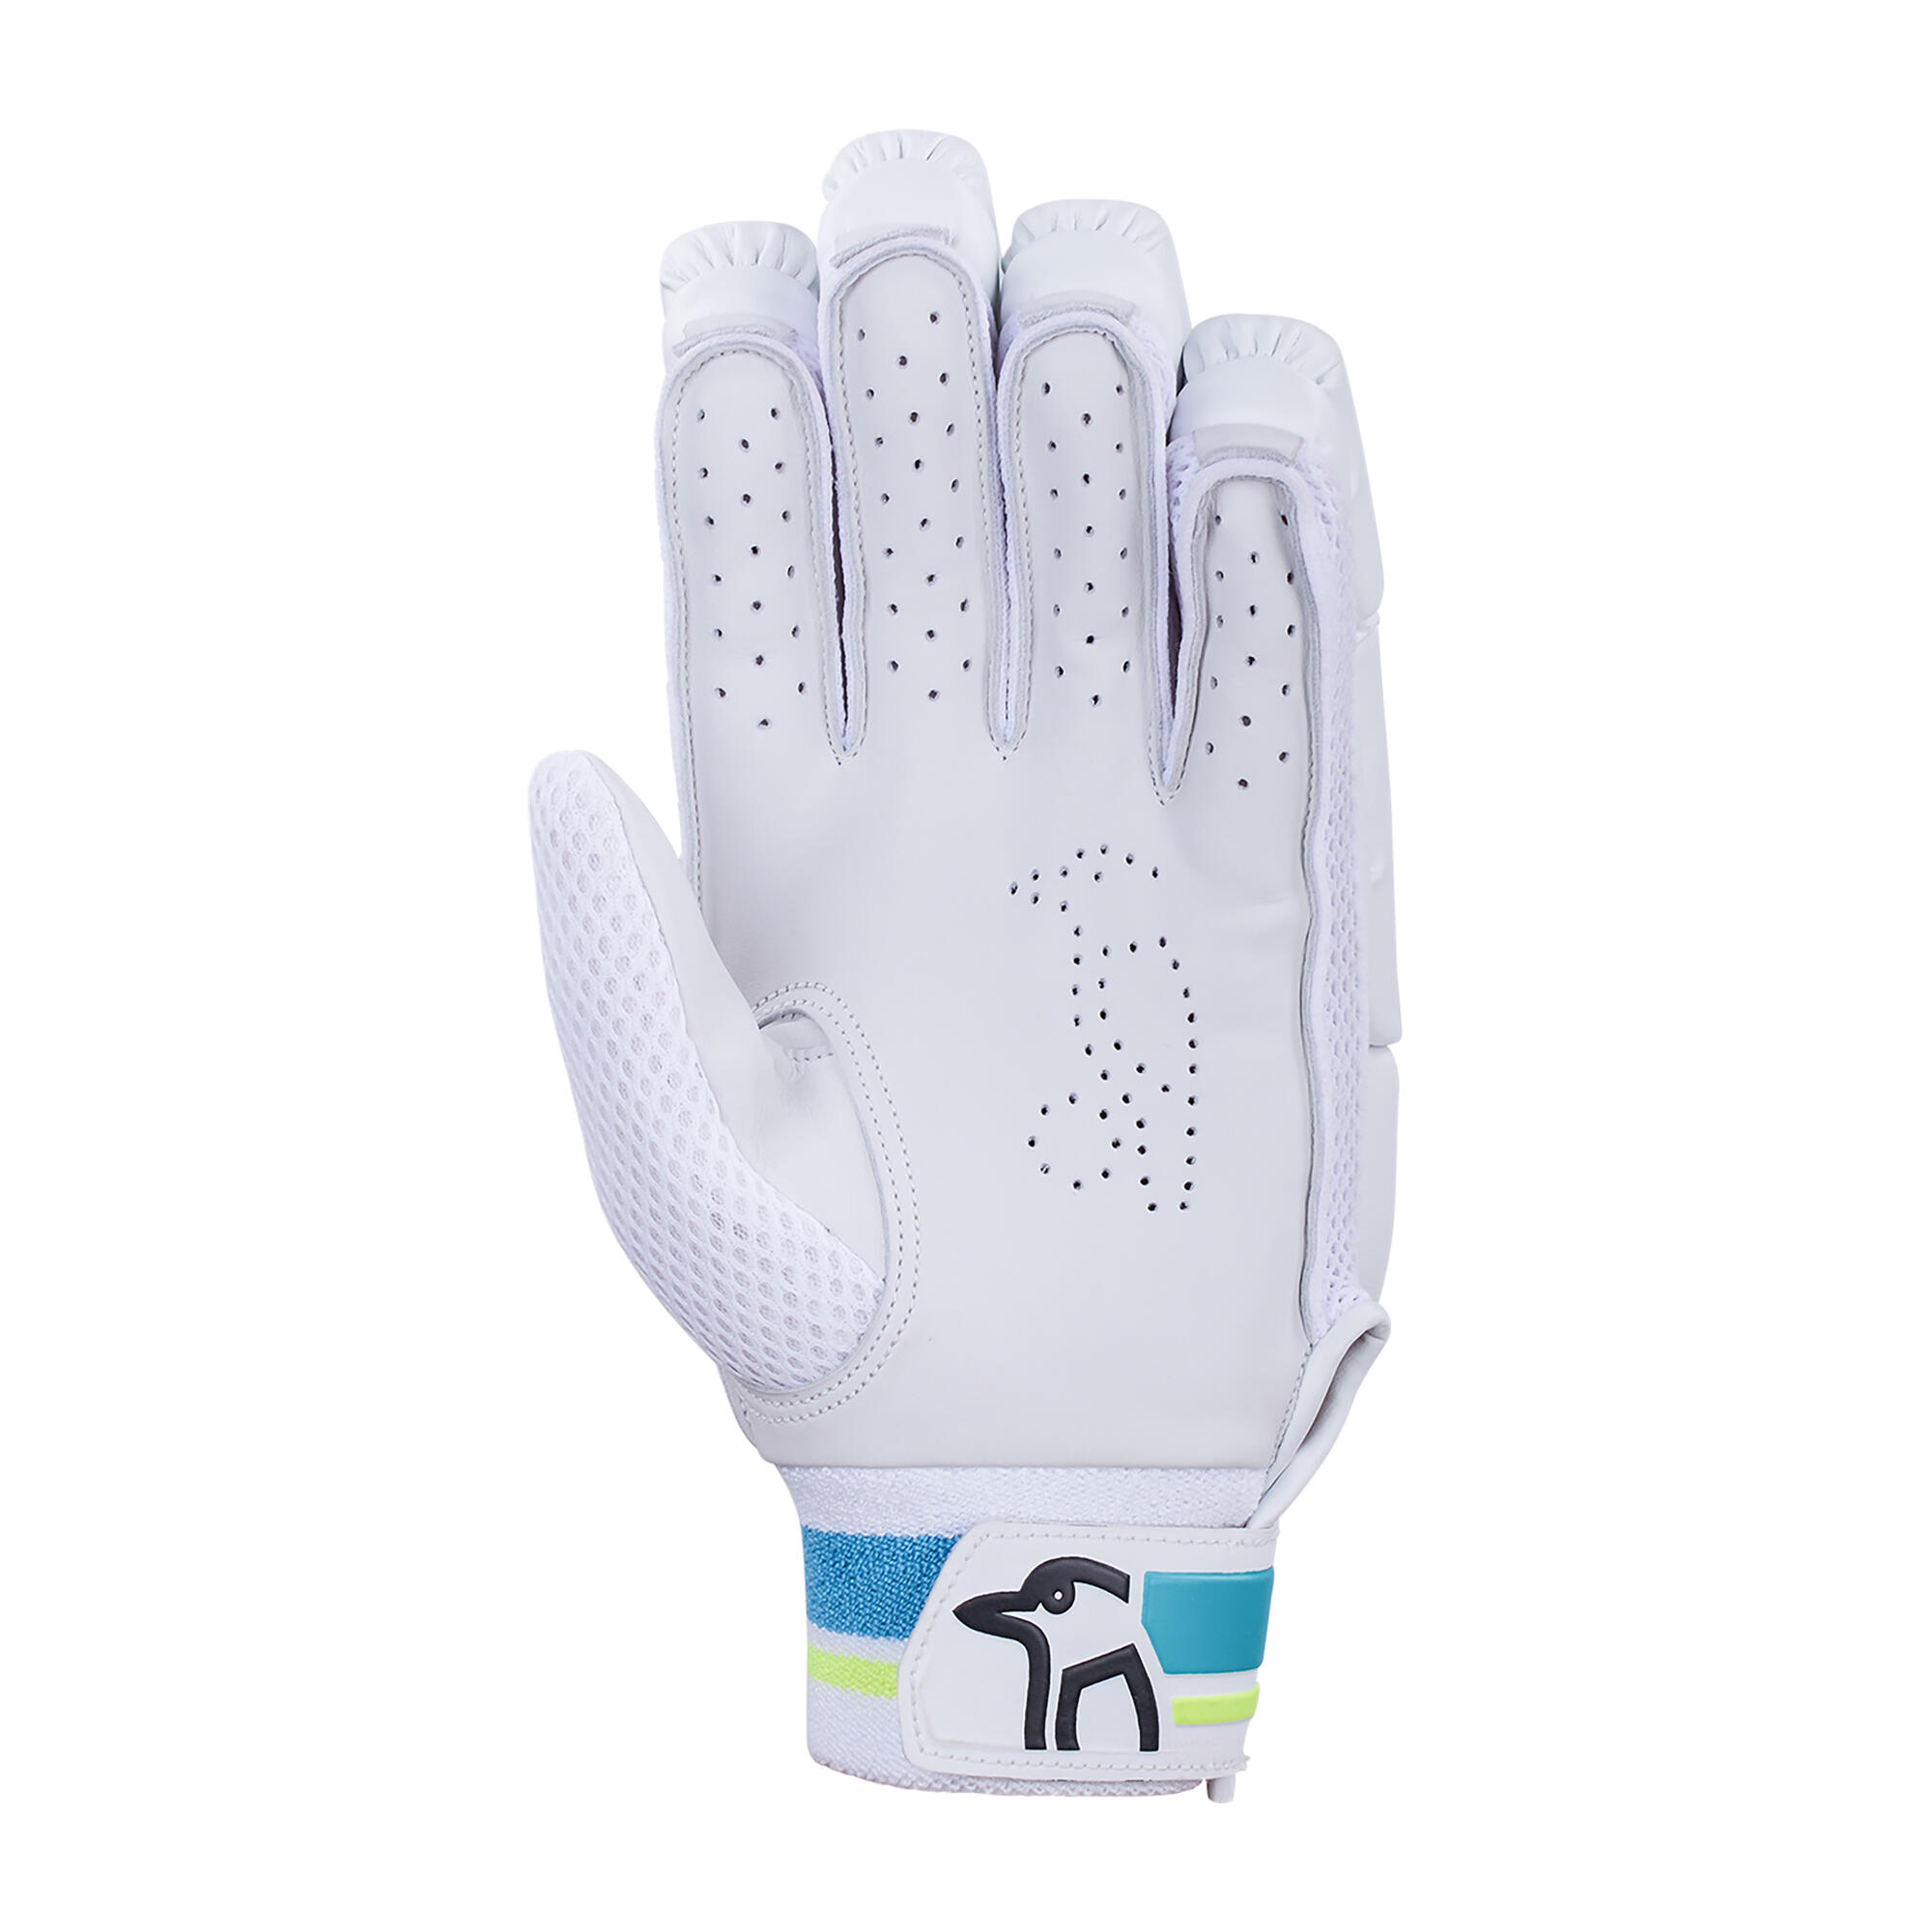 Kookaburra Rapid 3.1 Cricket Batting Gloves Adult 4/6